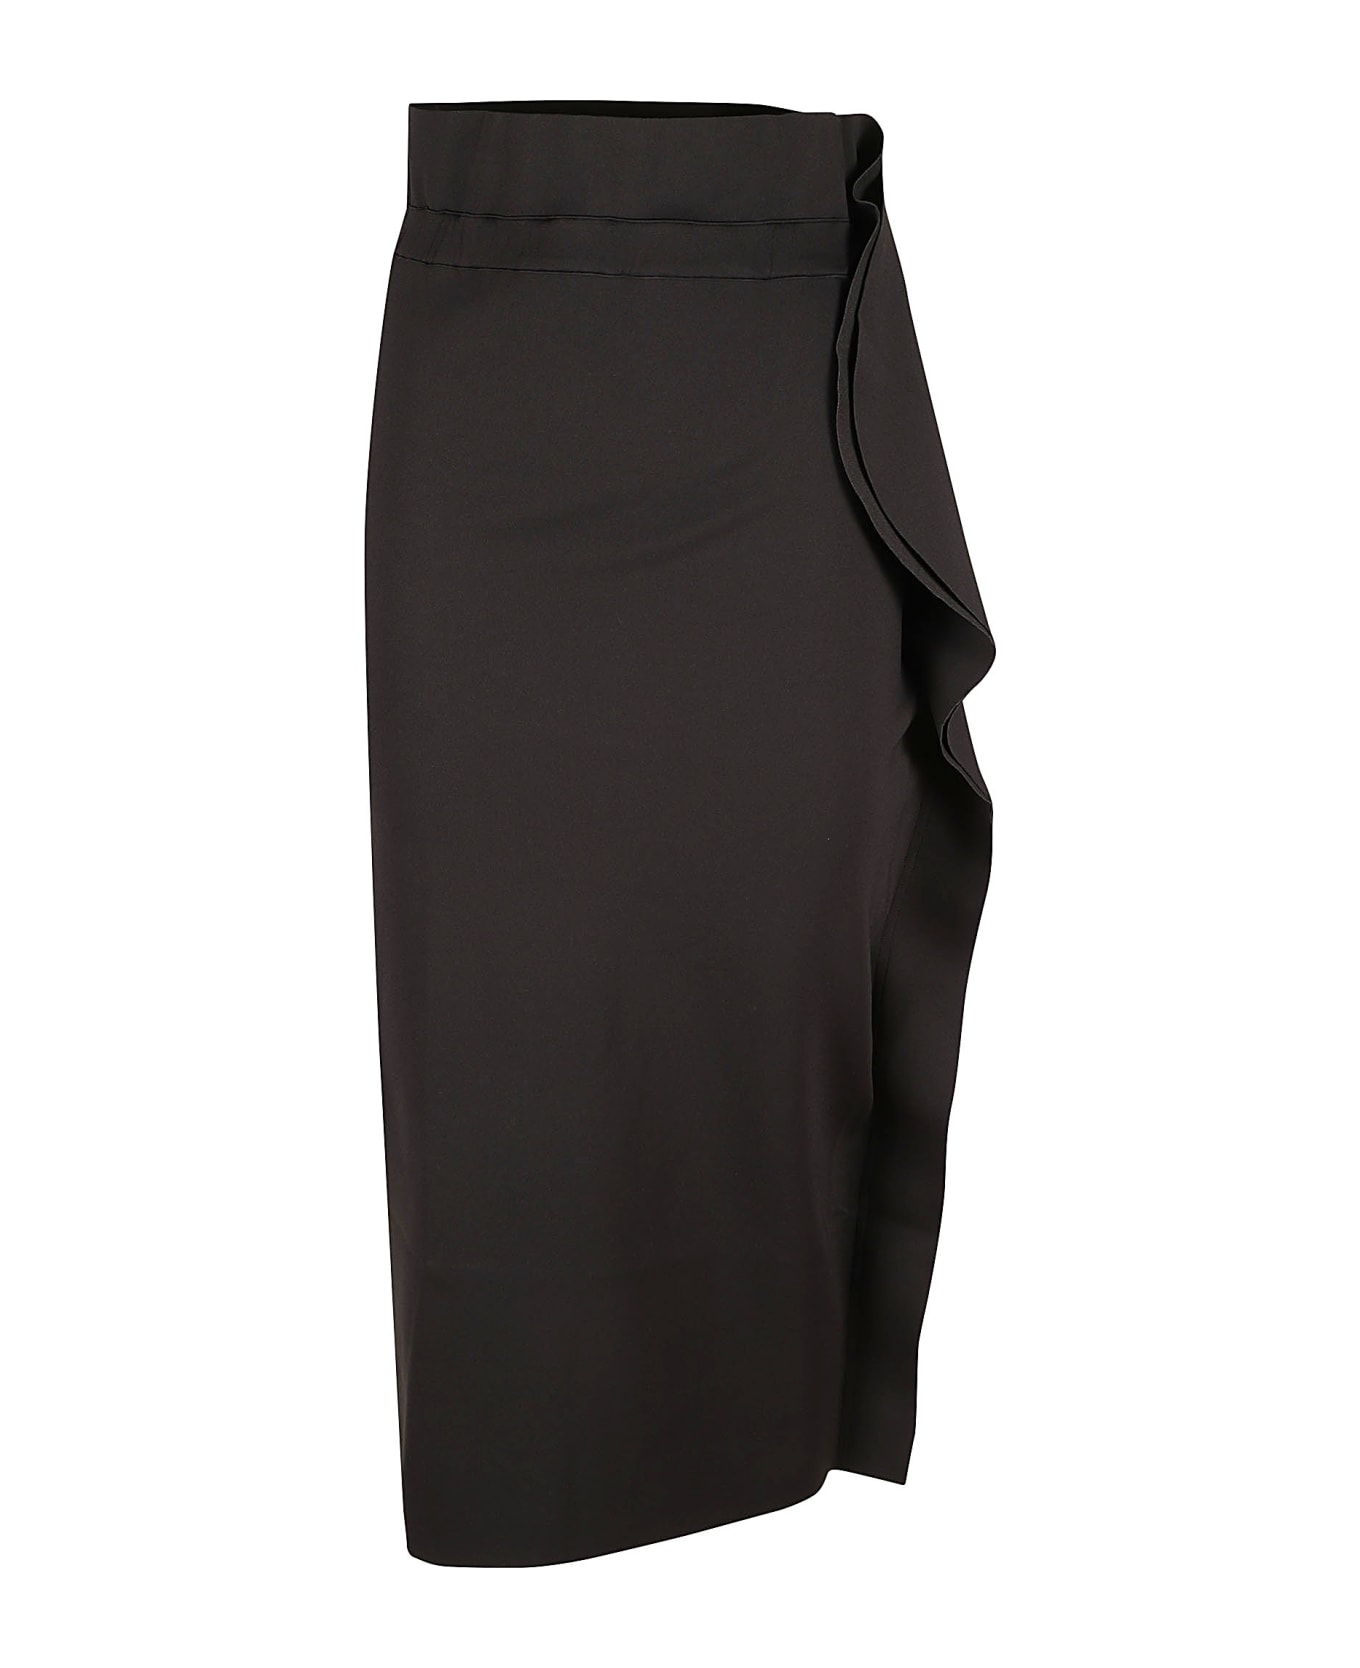 Fiorucci Ruffle Midi Skirt - black/Neoprene スカート